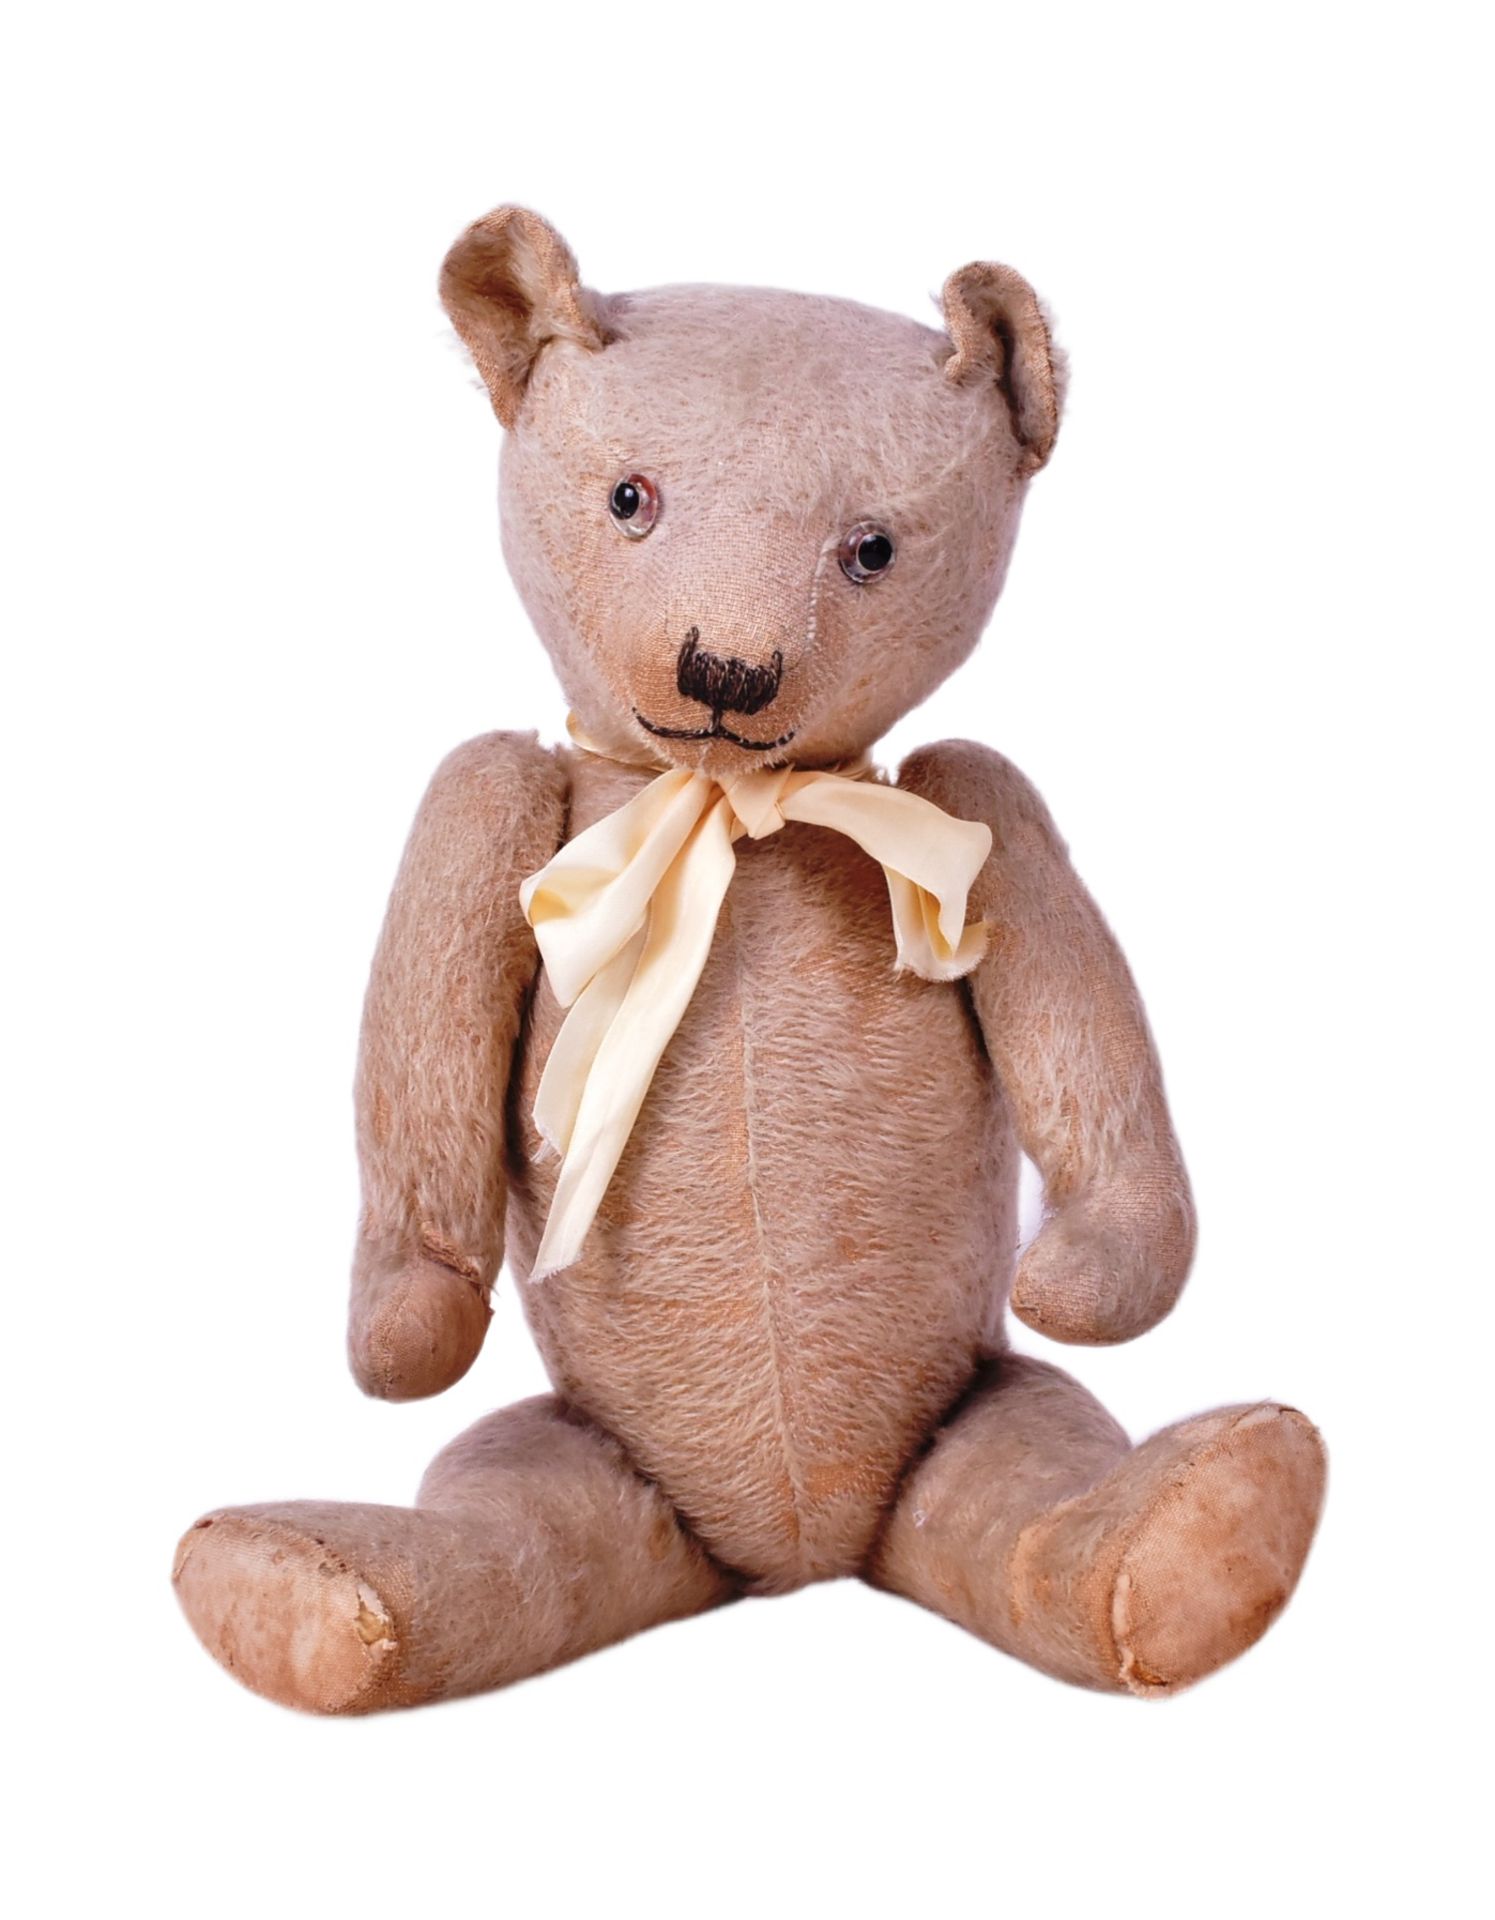 TEDDY BEARS - VINTAGE SOFT TOY TEDDY BEAR